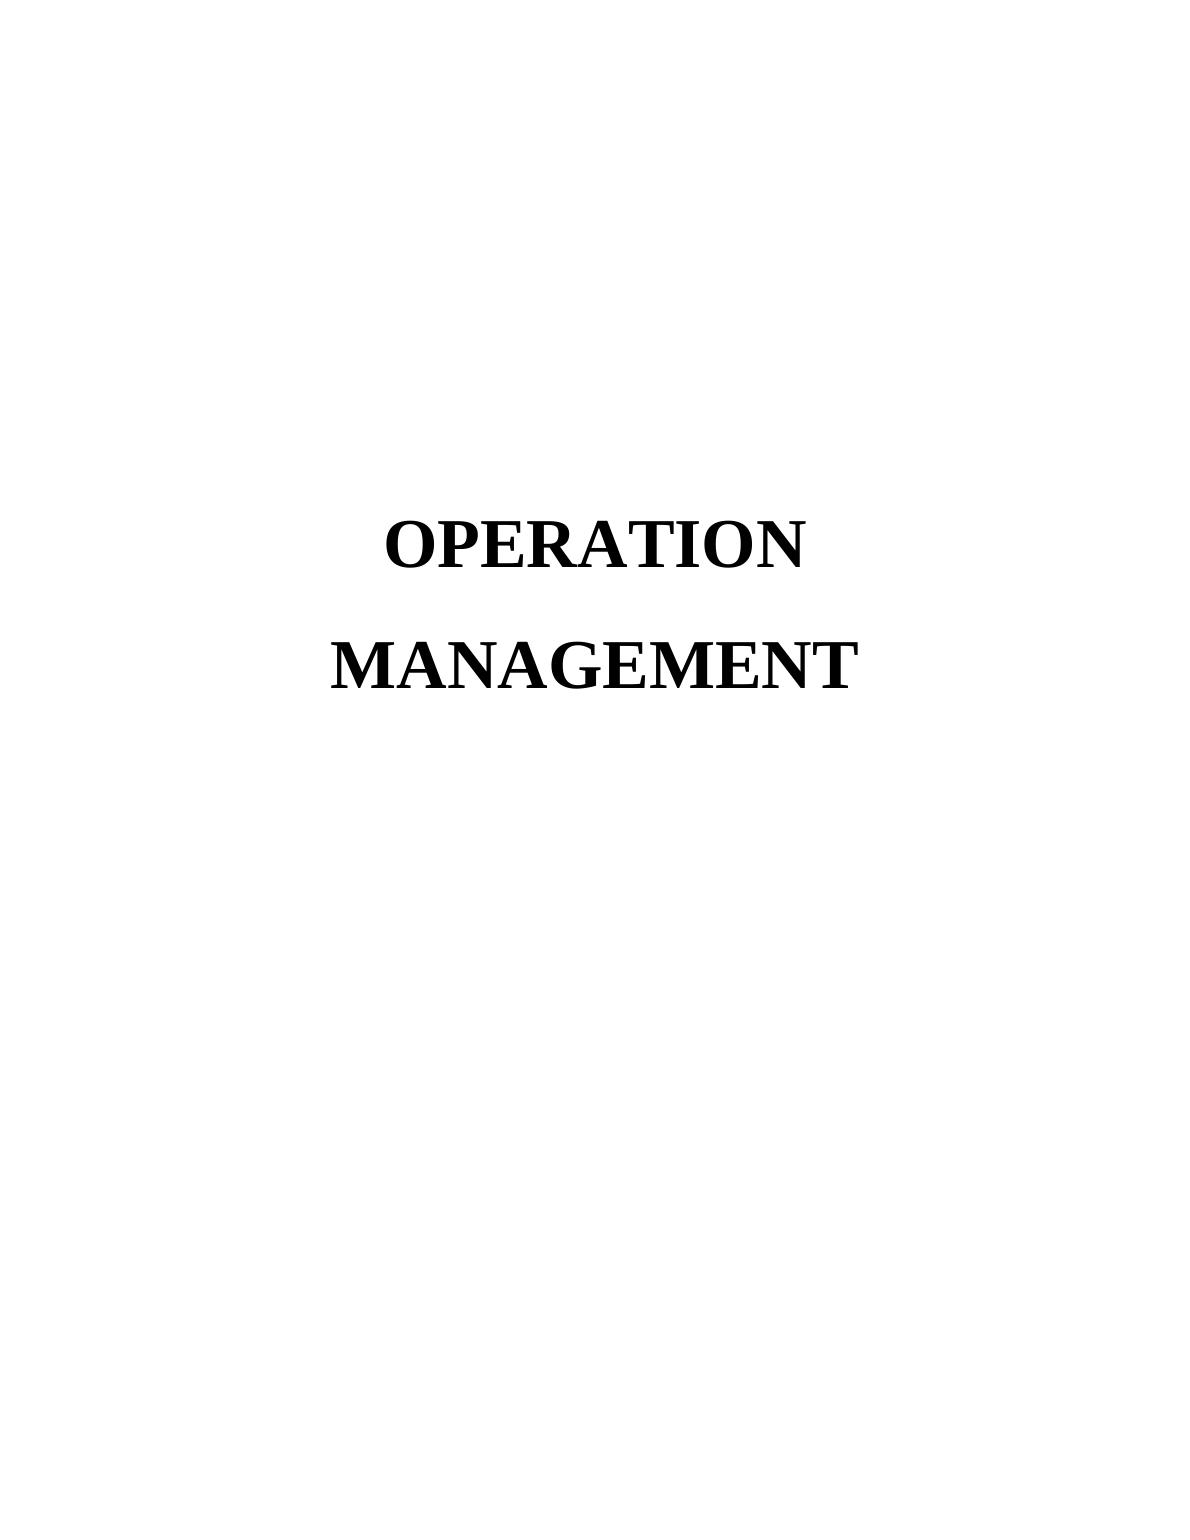 Operation Management : Assignment_1